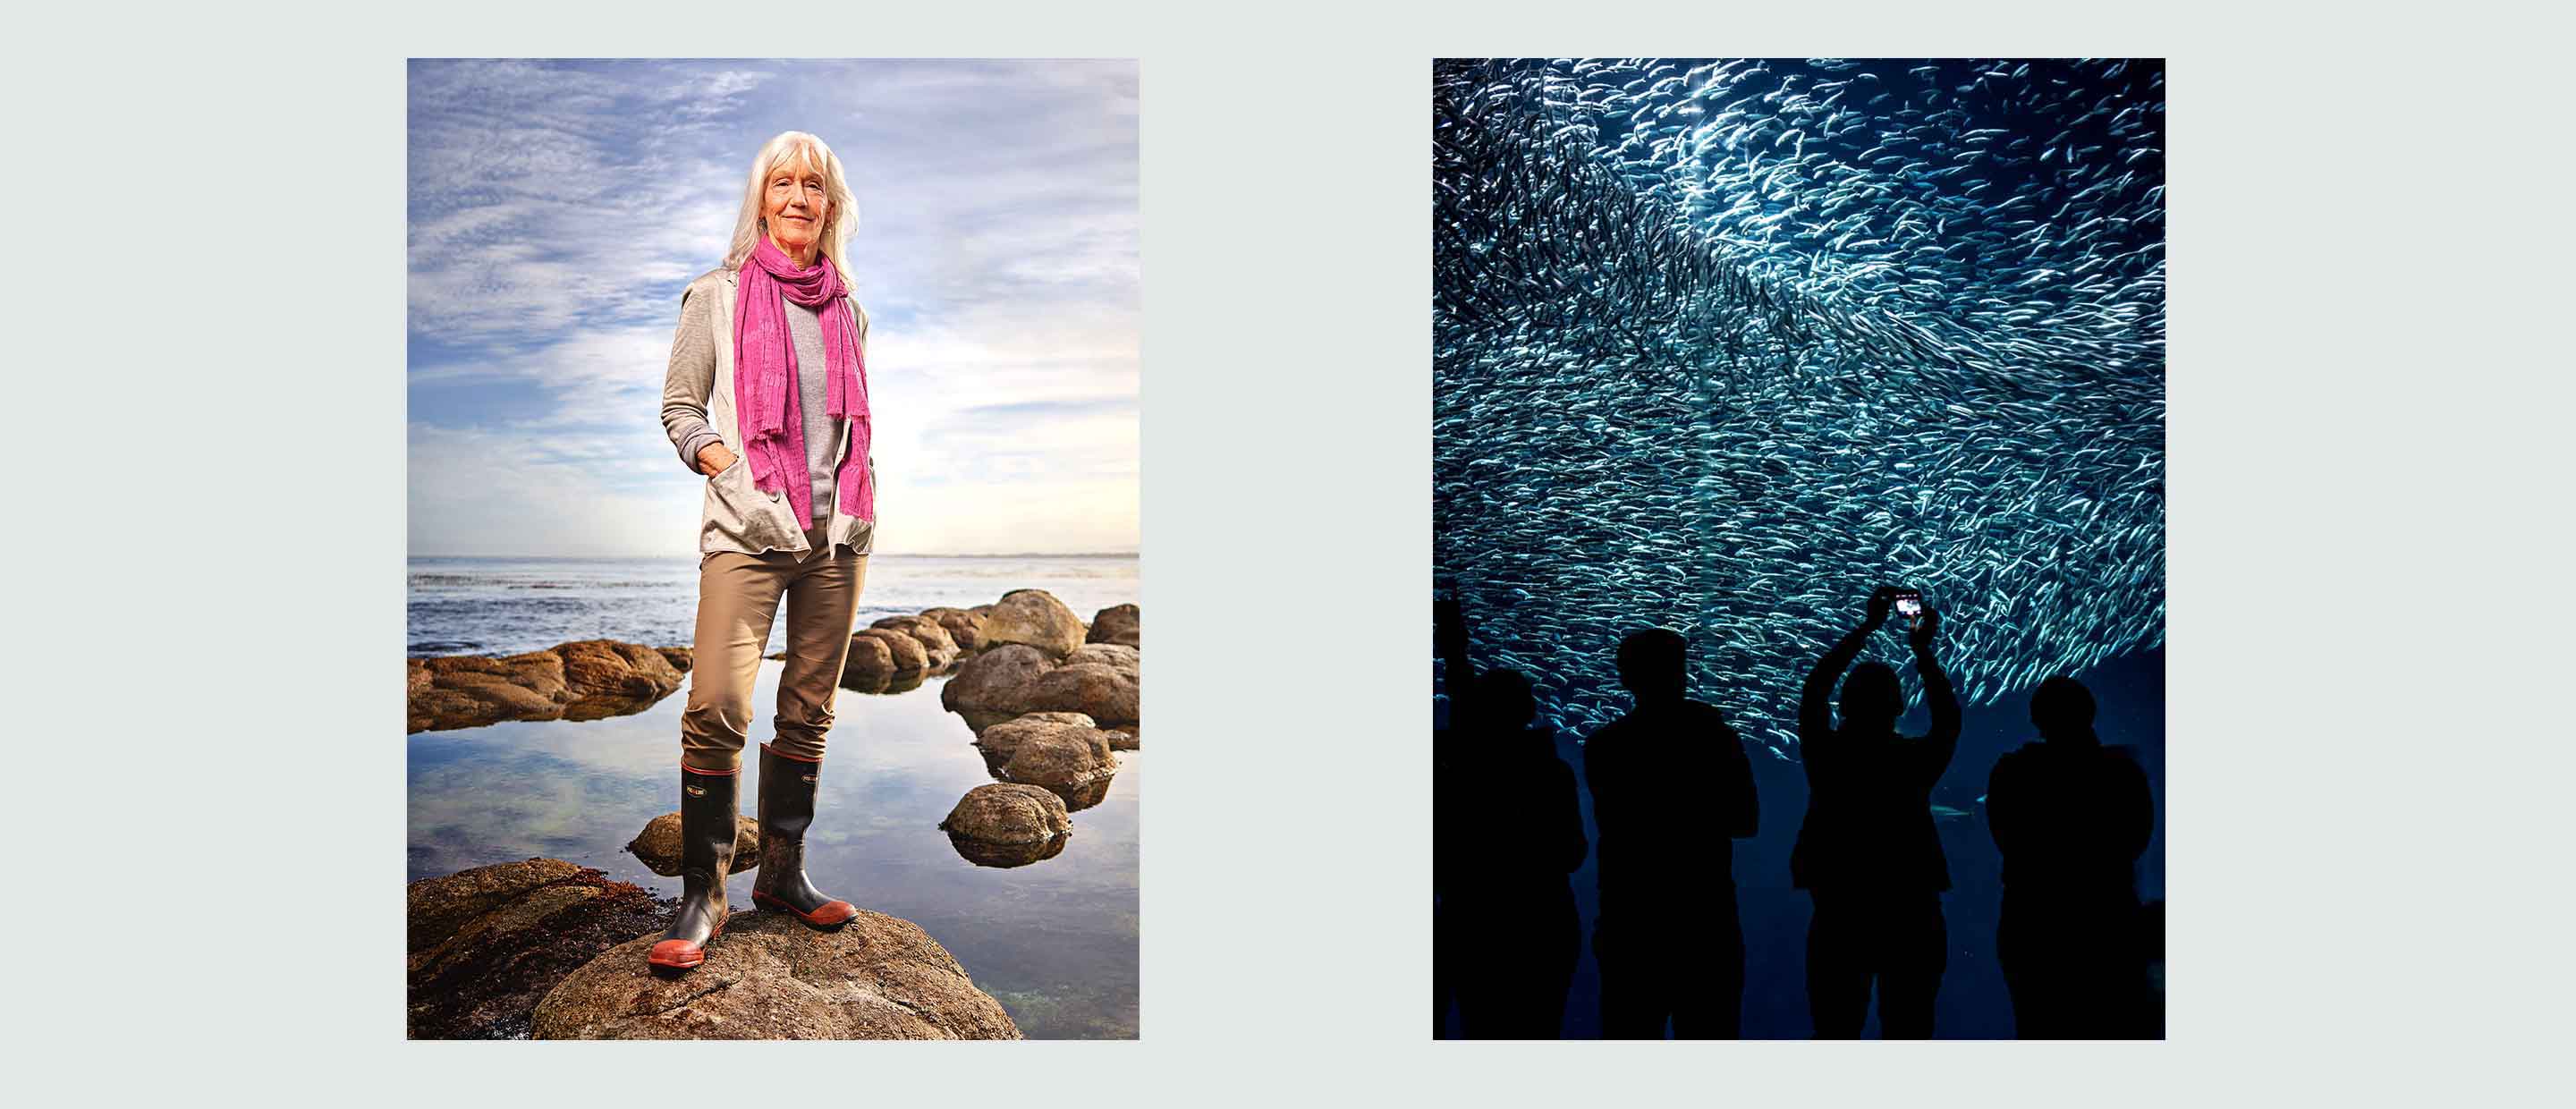 Julie Packard Monterey Bay aquarium